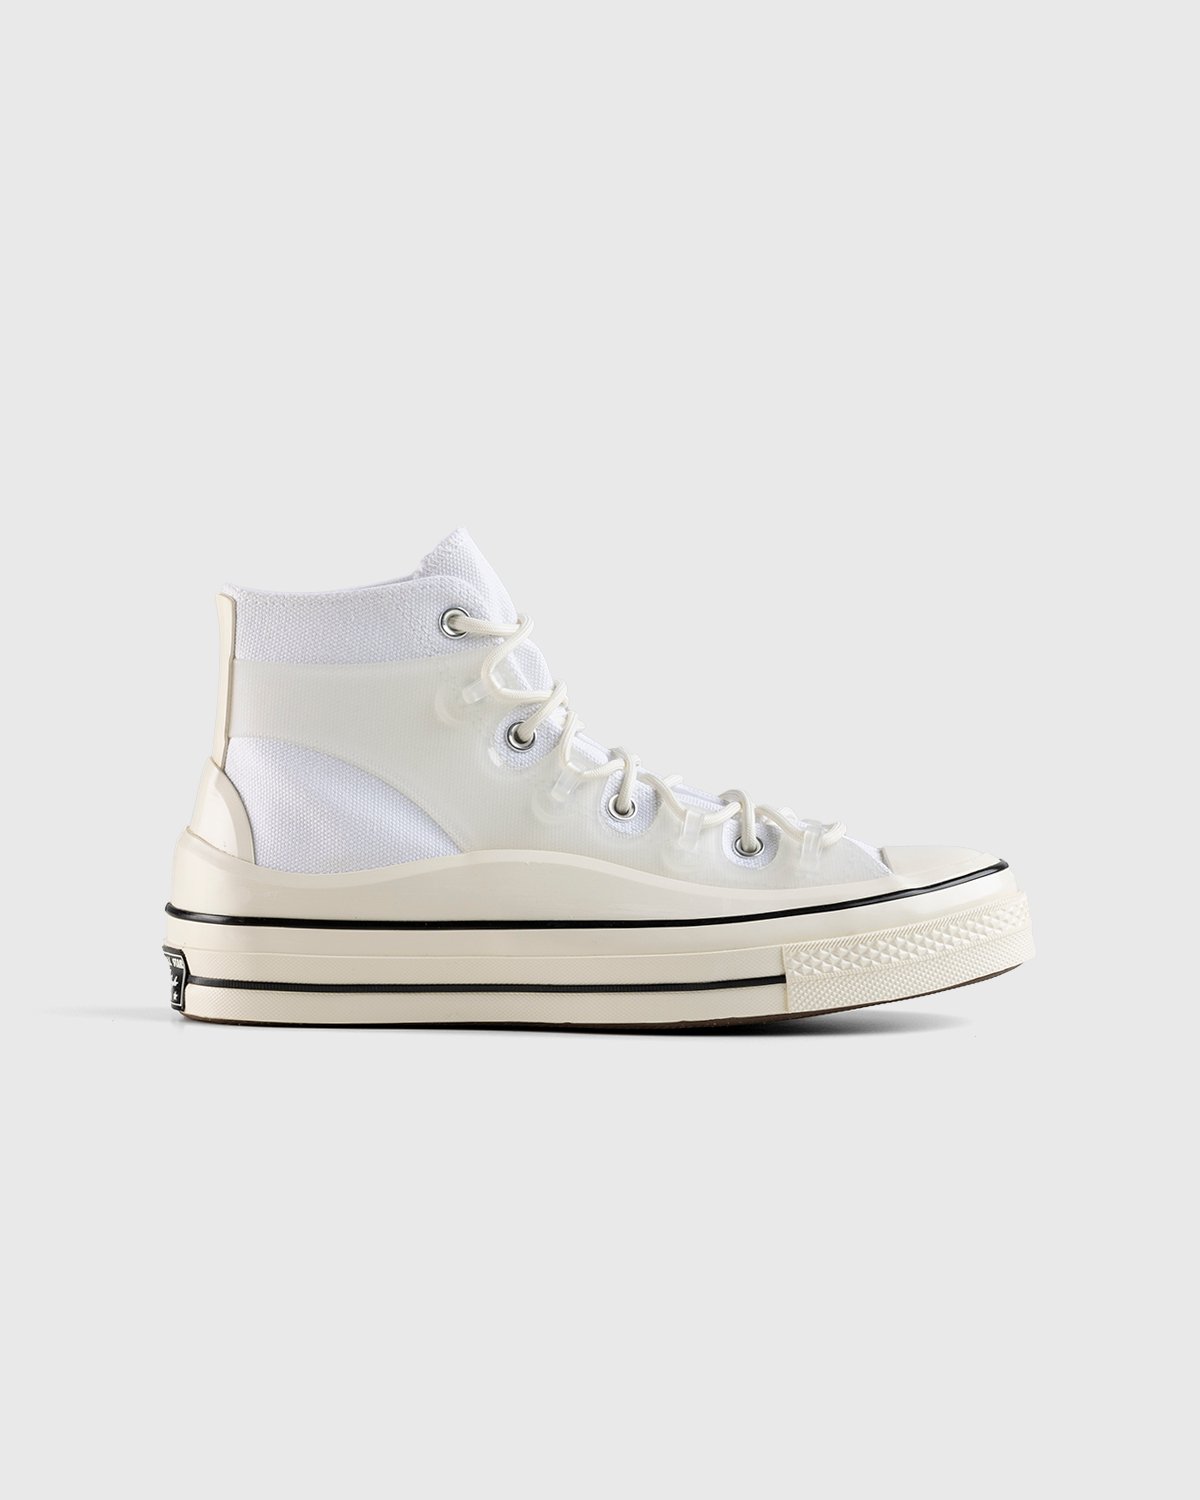 Converse - Chuck 70 Utility Hi White/Egret/Black - Footwear - White - Image 1